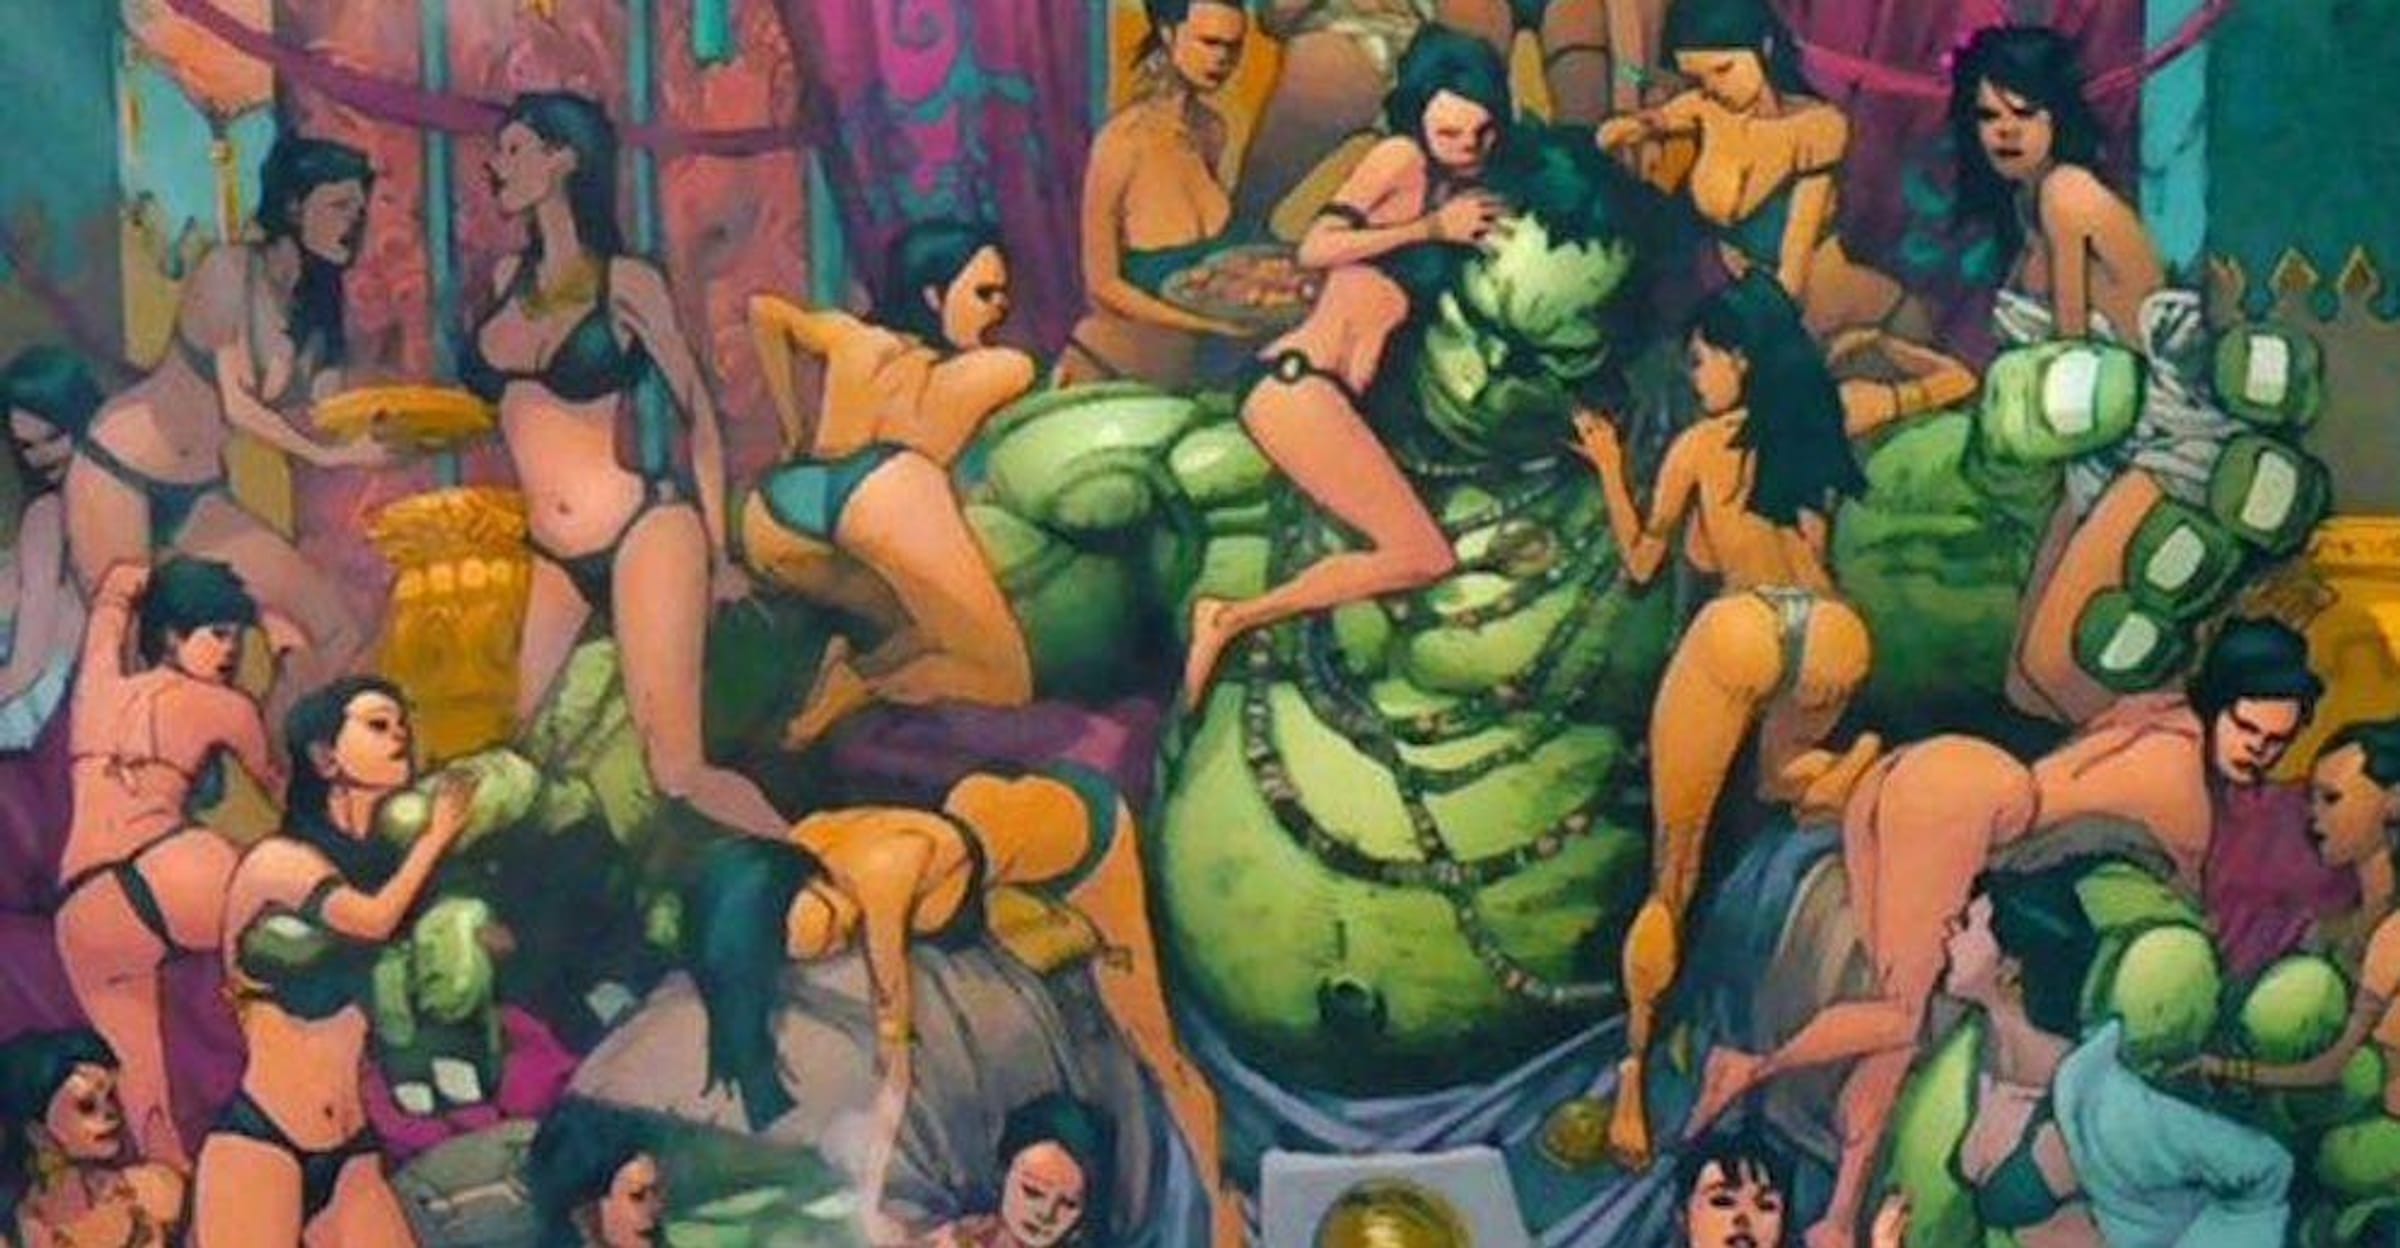 Hot Cartoon Porn Superheros - The 17 Most Sexually Deviant Superheroes In Comics